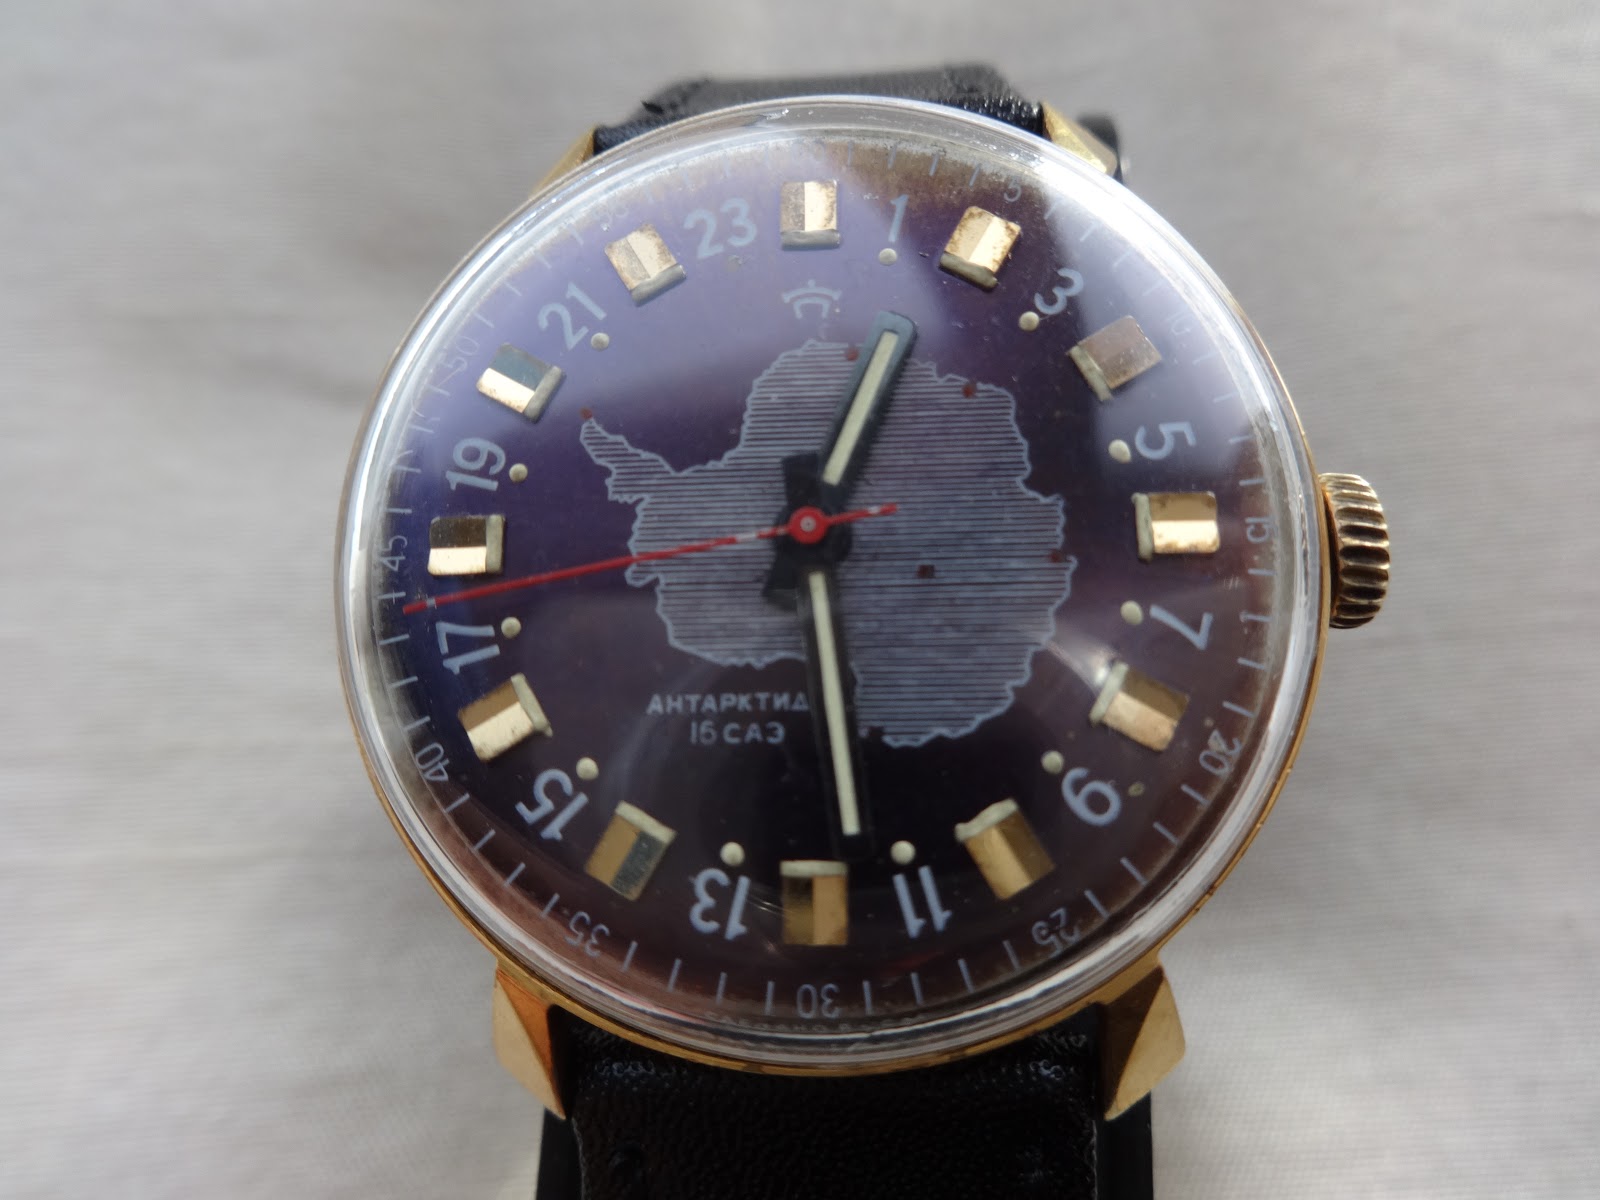 Russ/Russian Watches: Extremely Rare. Raketa Antarktida. 